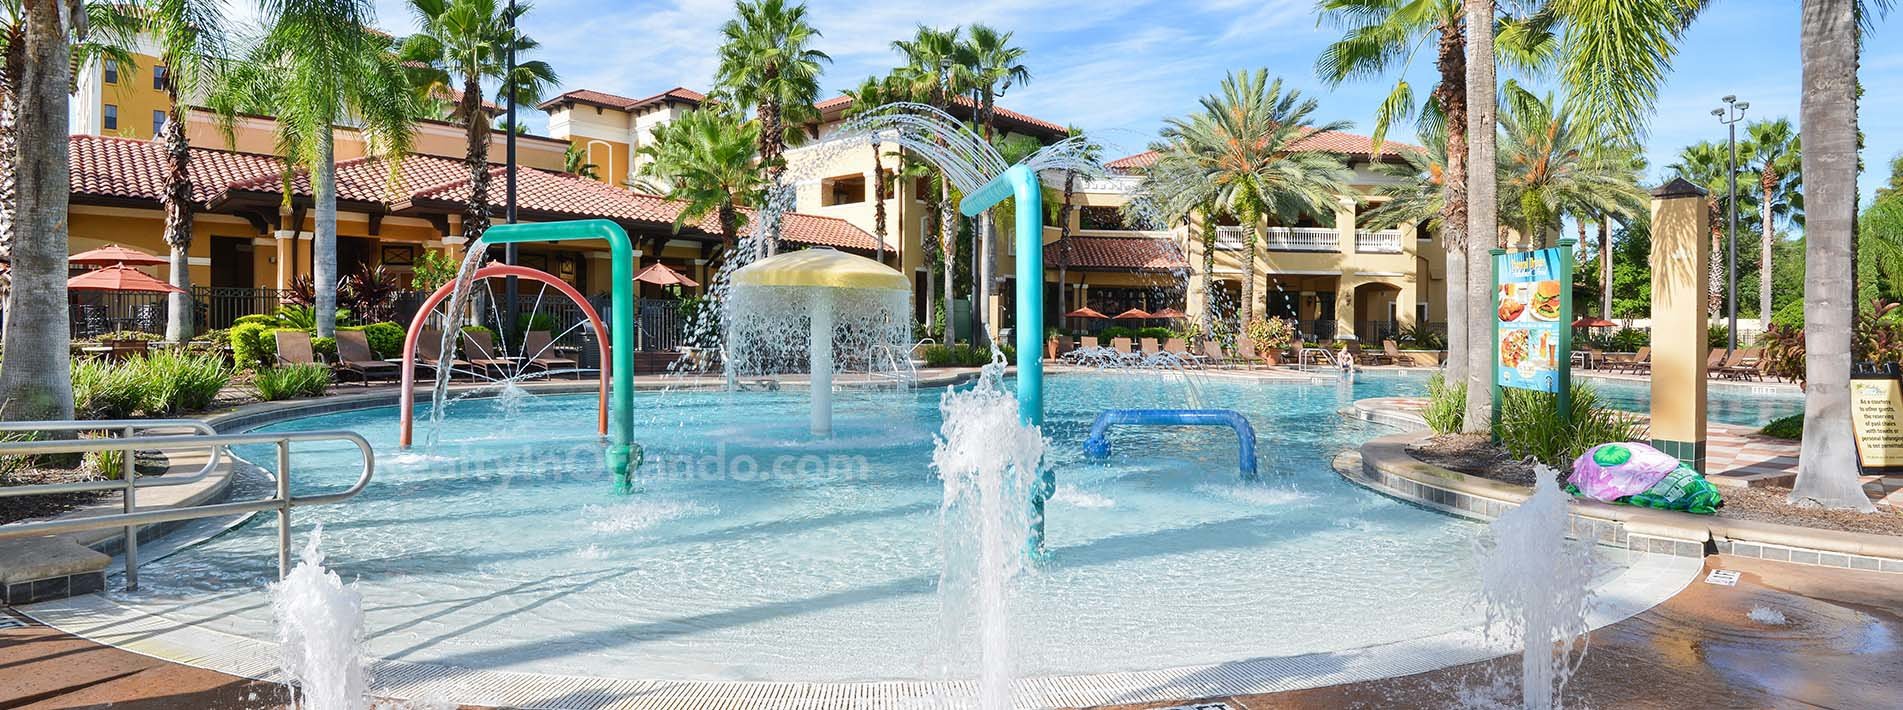 Floridays Orlando Resort Children's Pool Area